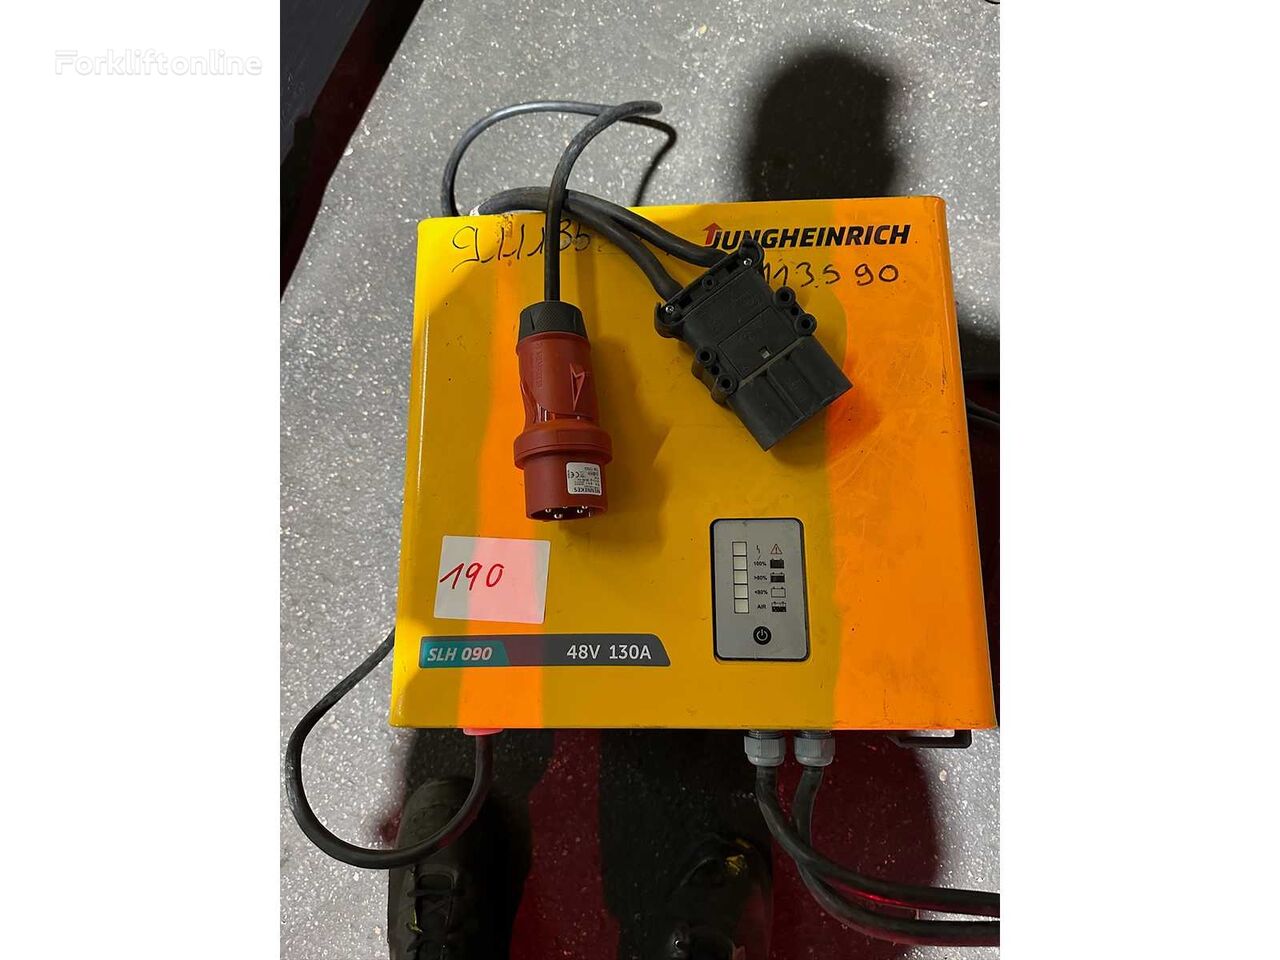 Jungheinrich SLH 090 forklift battery charger